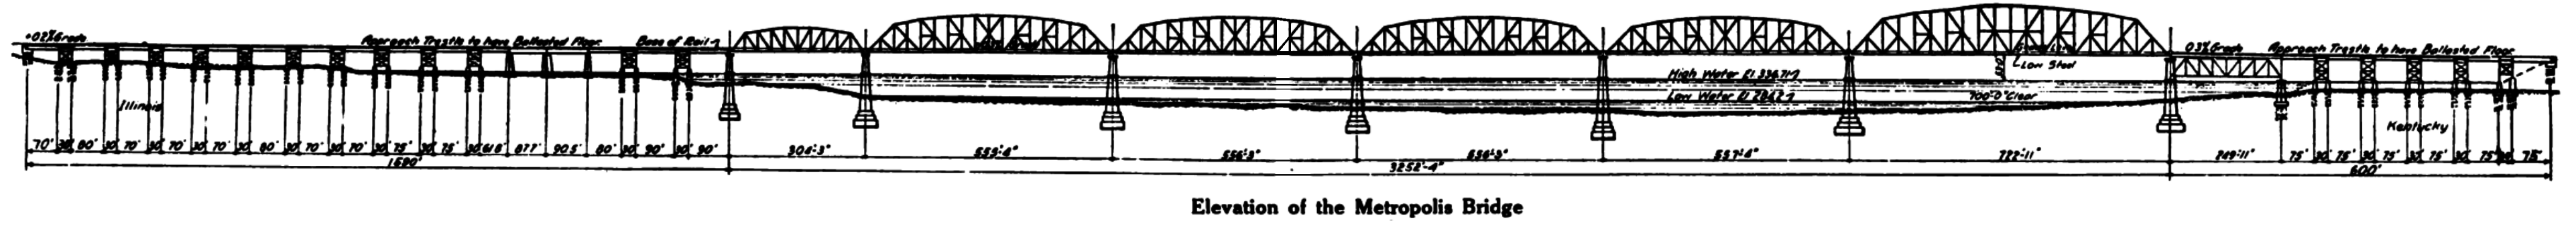 Metropolis Bridge